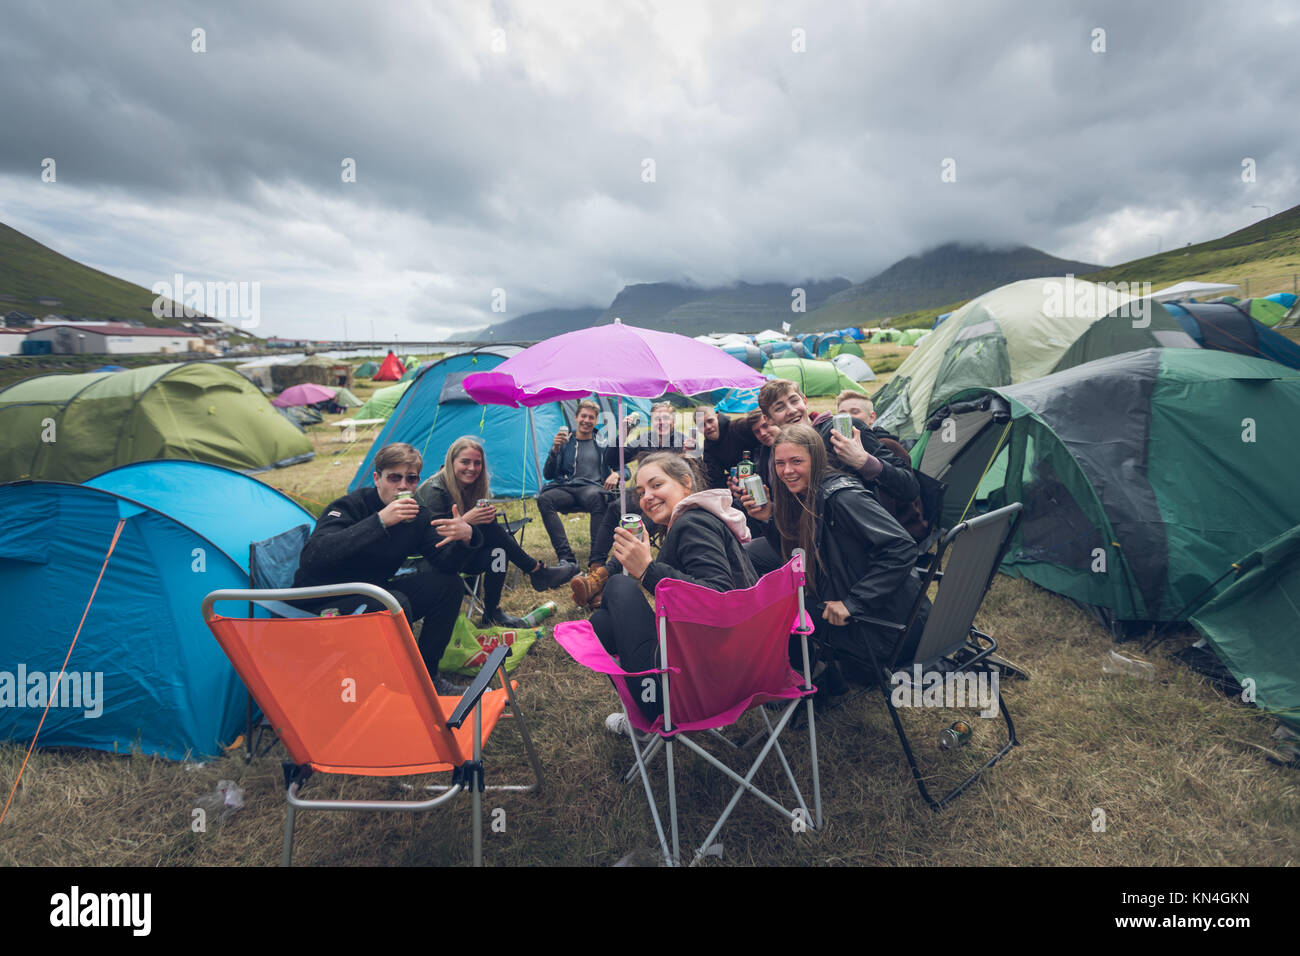 Jungs Spaß auf dem Campingplatz Bereich der G! Festival 2017. Syðrugøta, Färöer Inseln Stockfoto